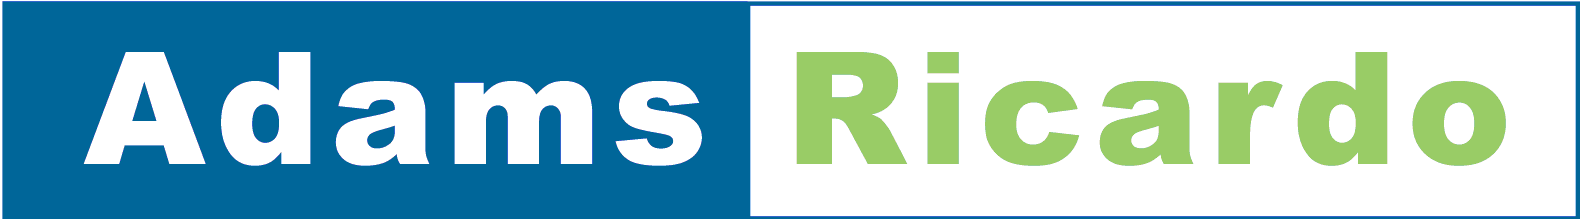 Adams Ricardo Logo